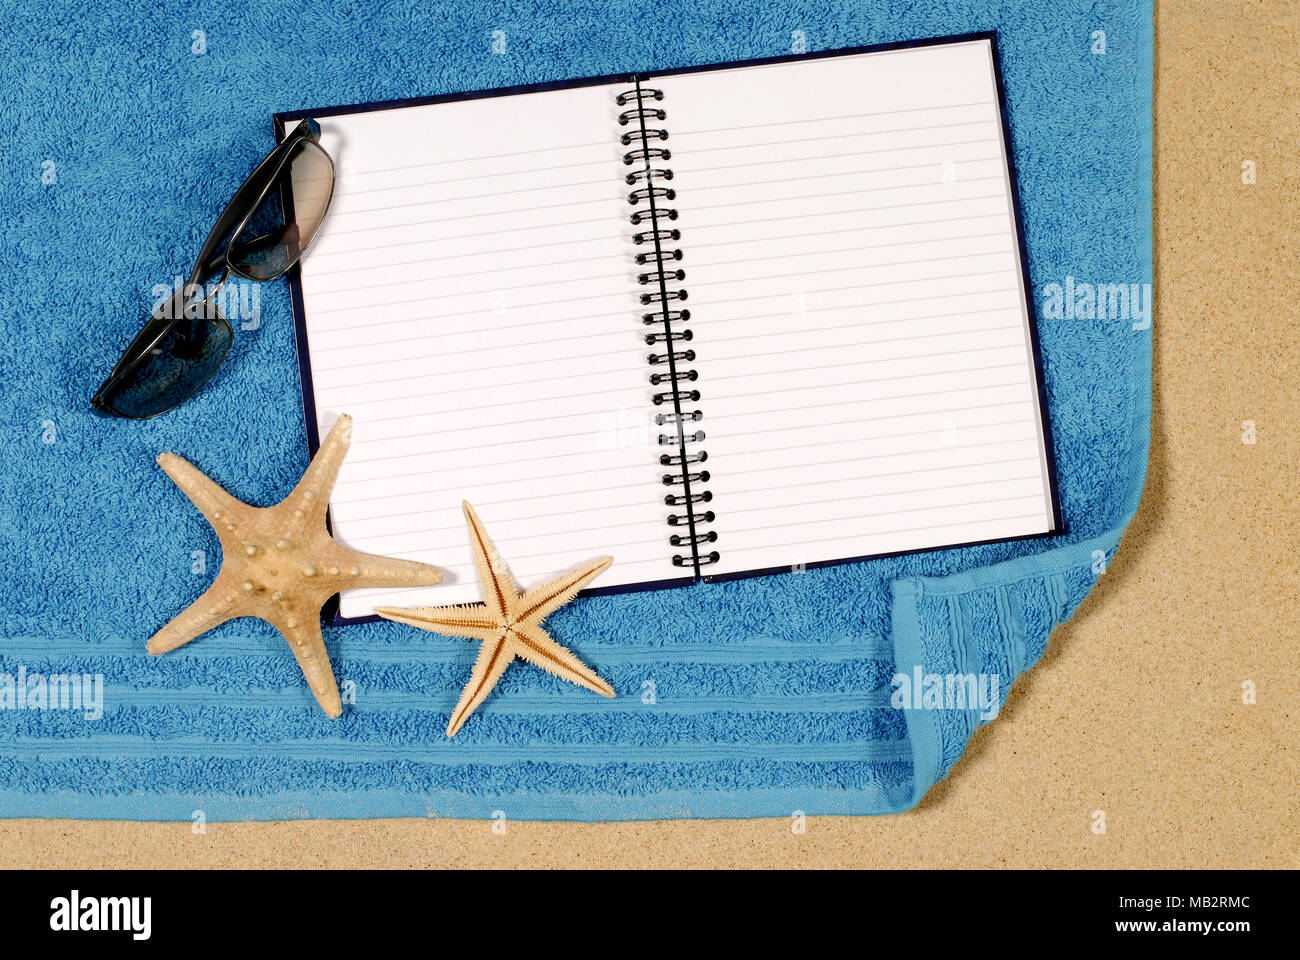 Beach scene with starfish, towel, sunglasses and blank writing book Stock Photo